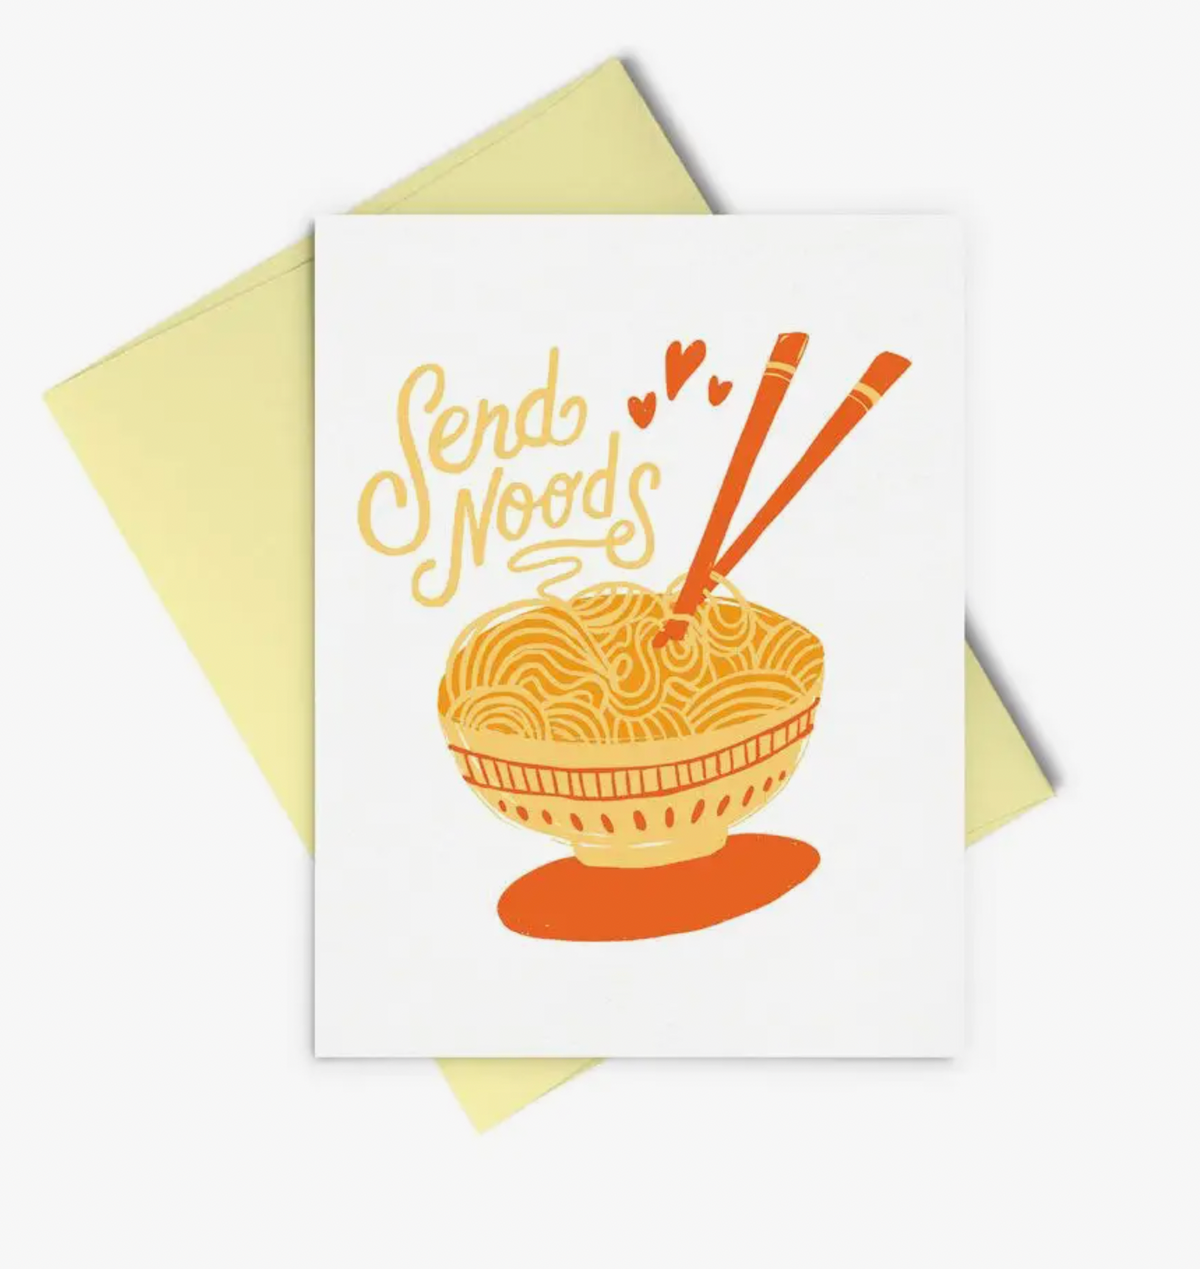 Send Noods Greeting Card